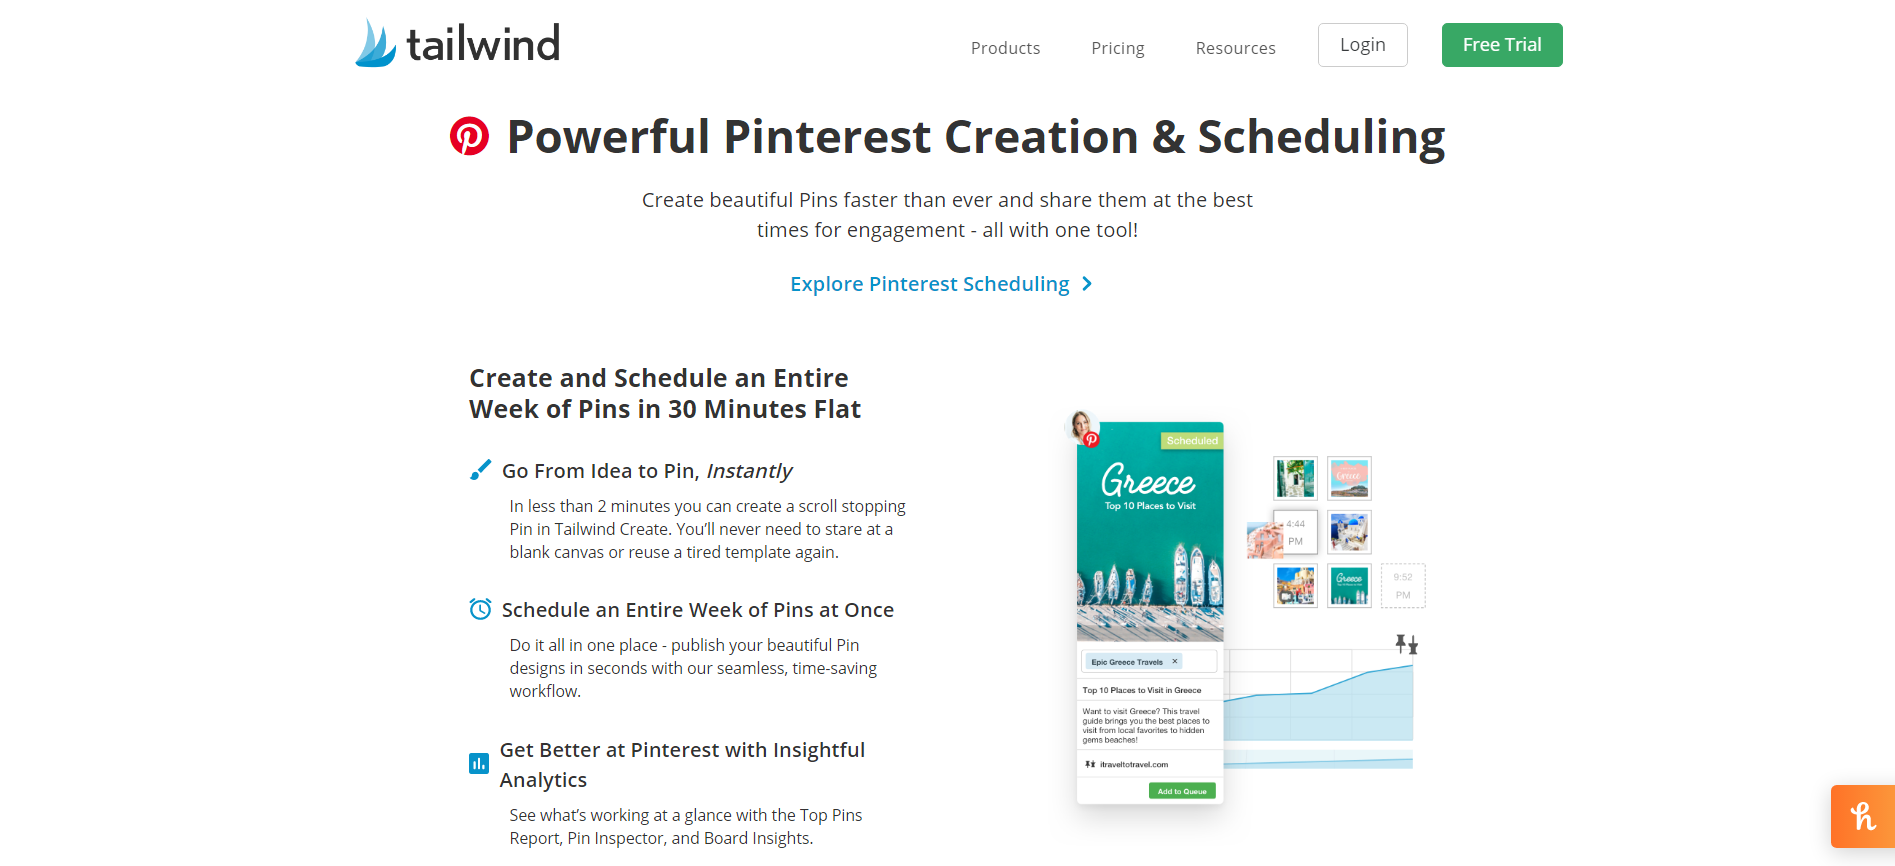 Tailwind Pinterest Creator Screenshot for "20 Must Have Social Media Marketing Tools" blog post